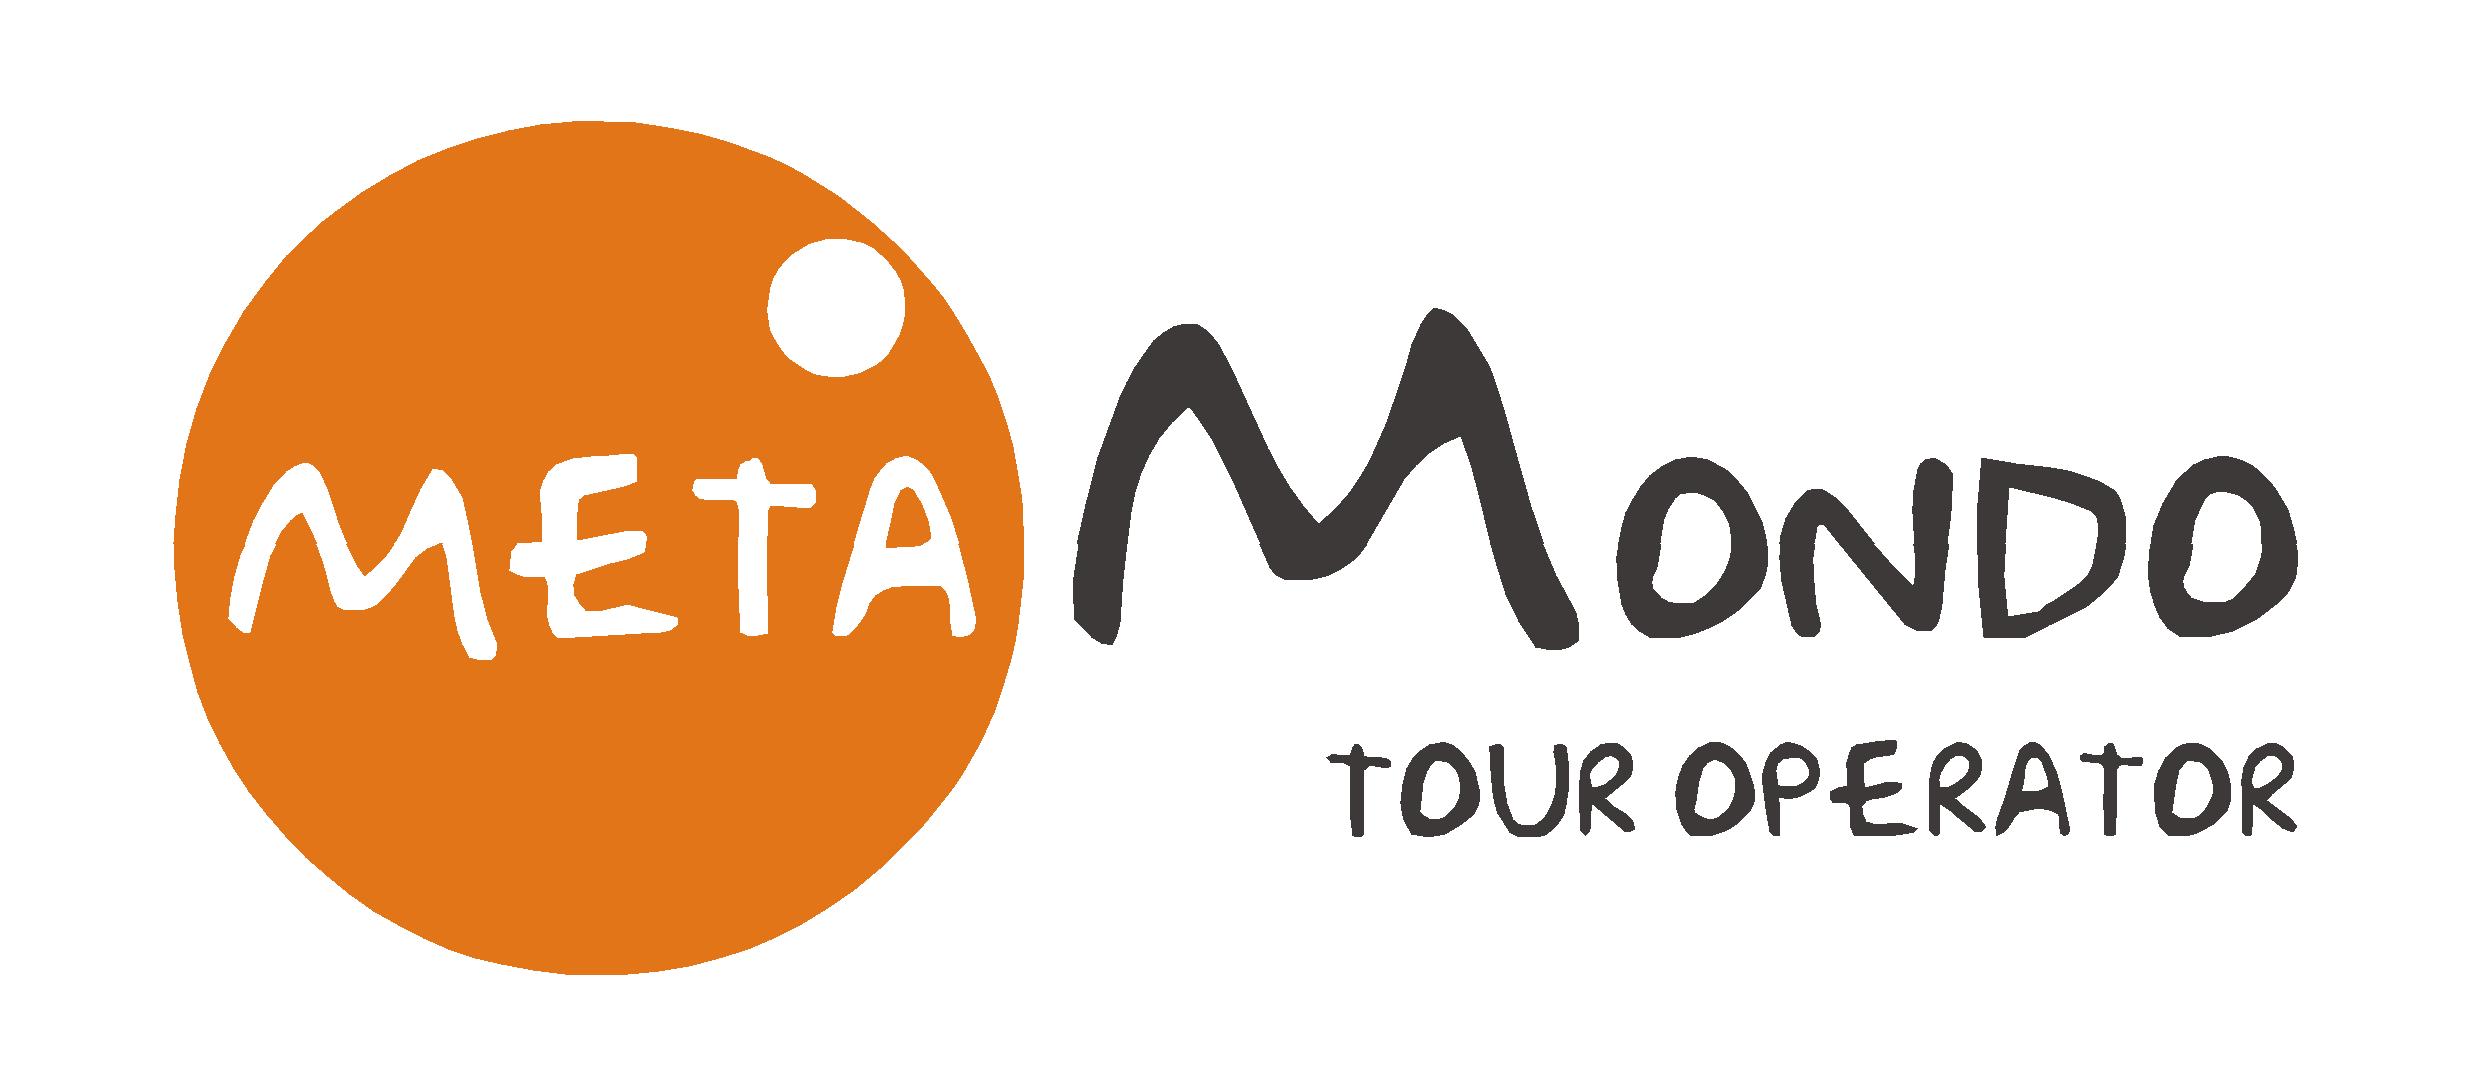 metamondo tour operator